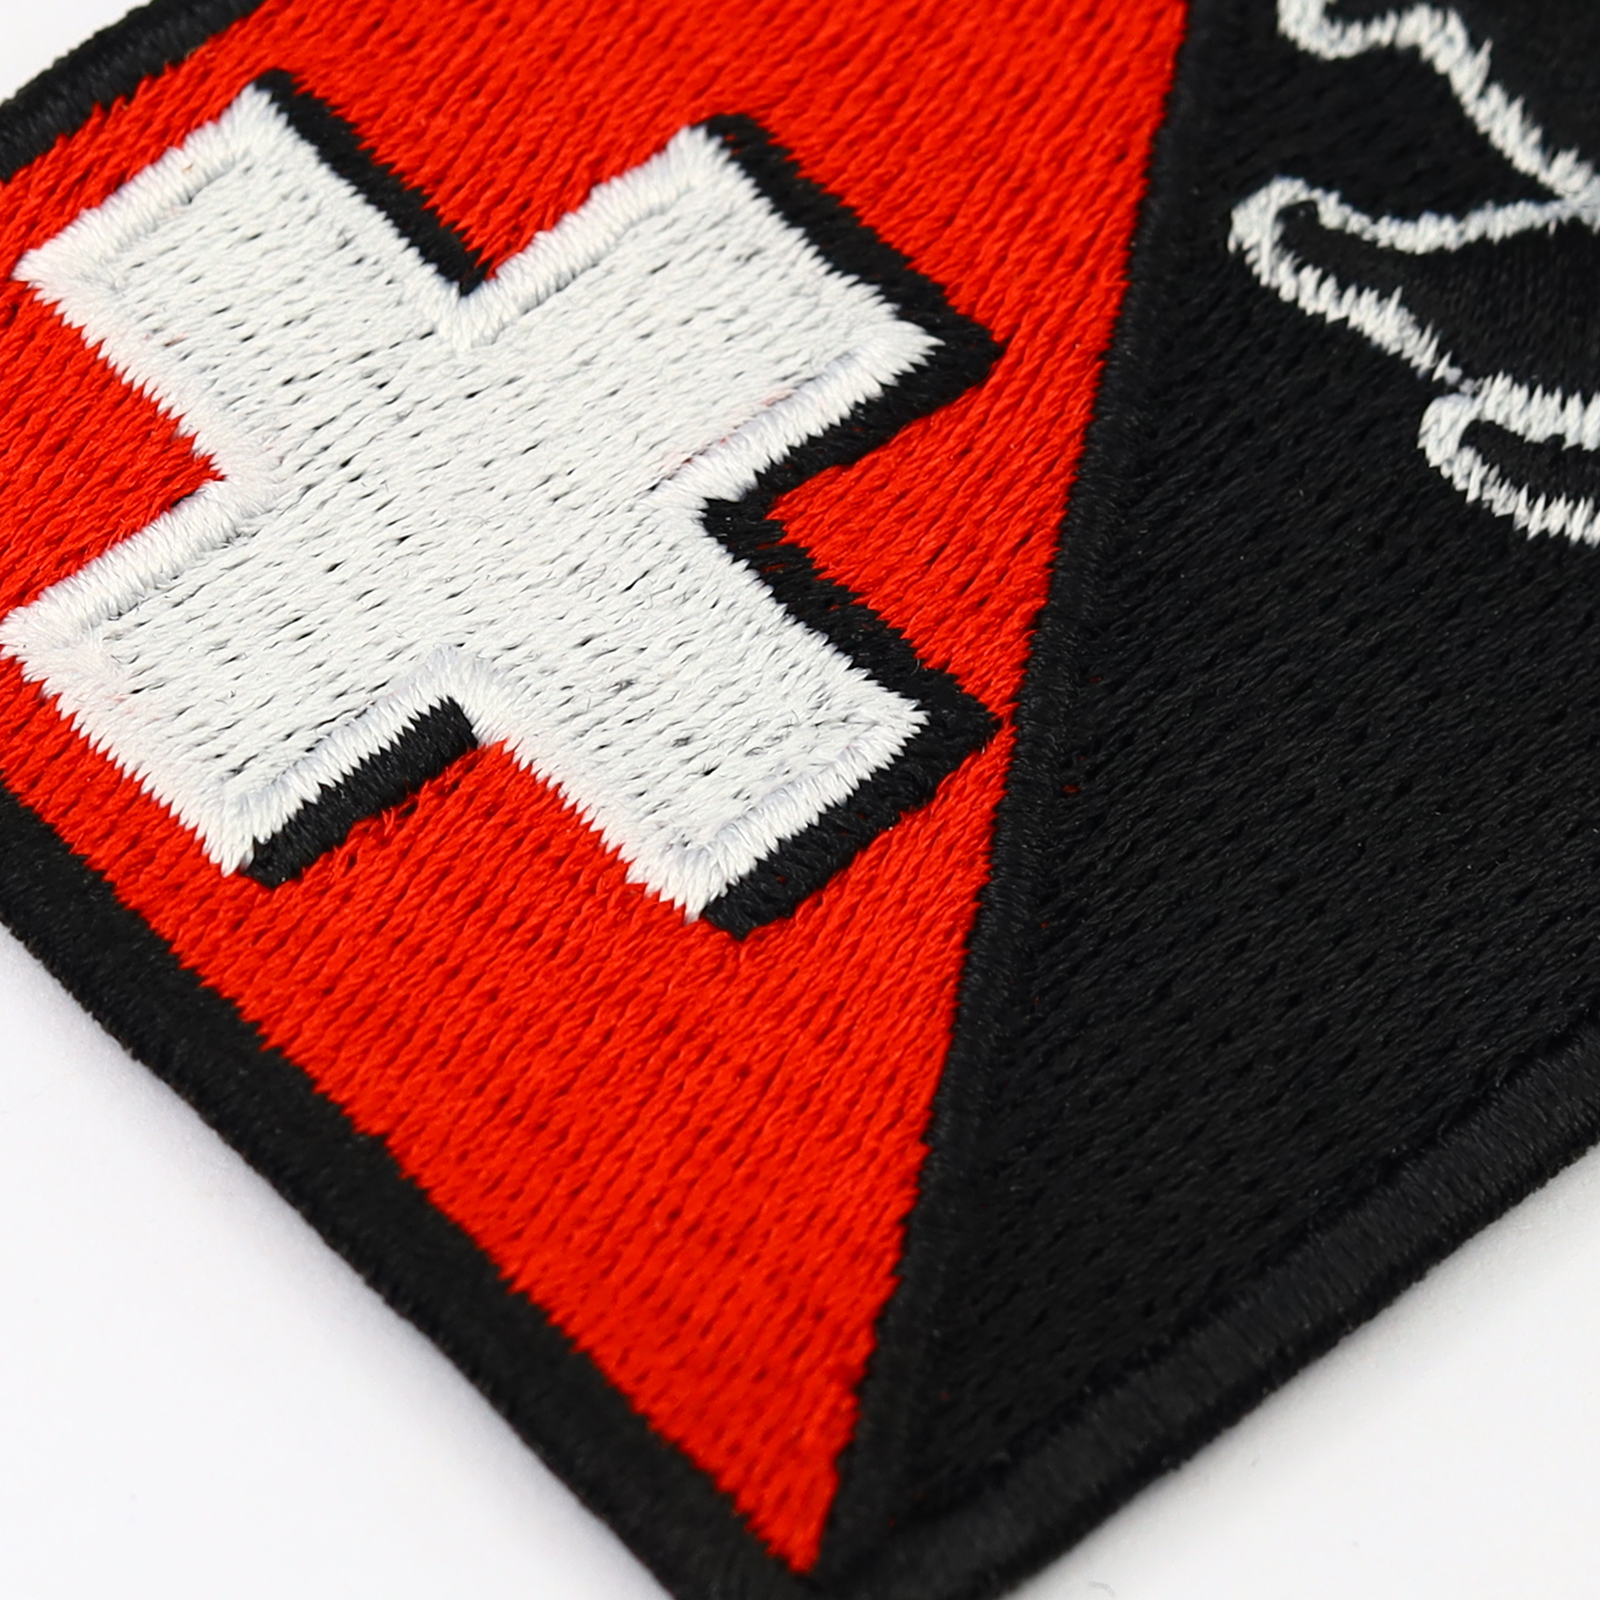 Swiss K9 Flag mit Pfote - Patch